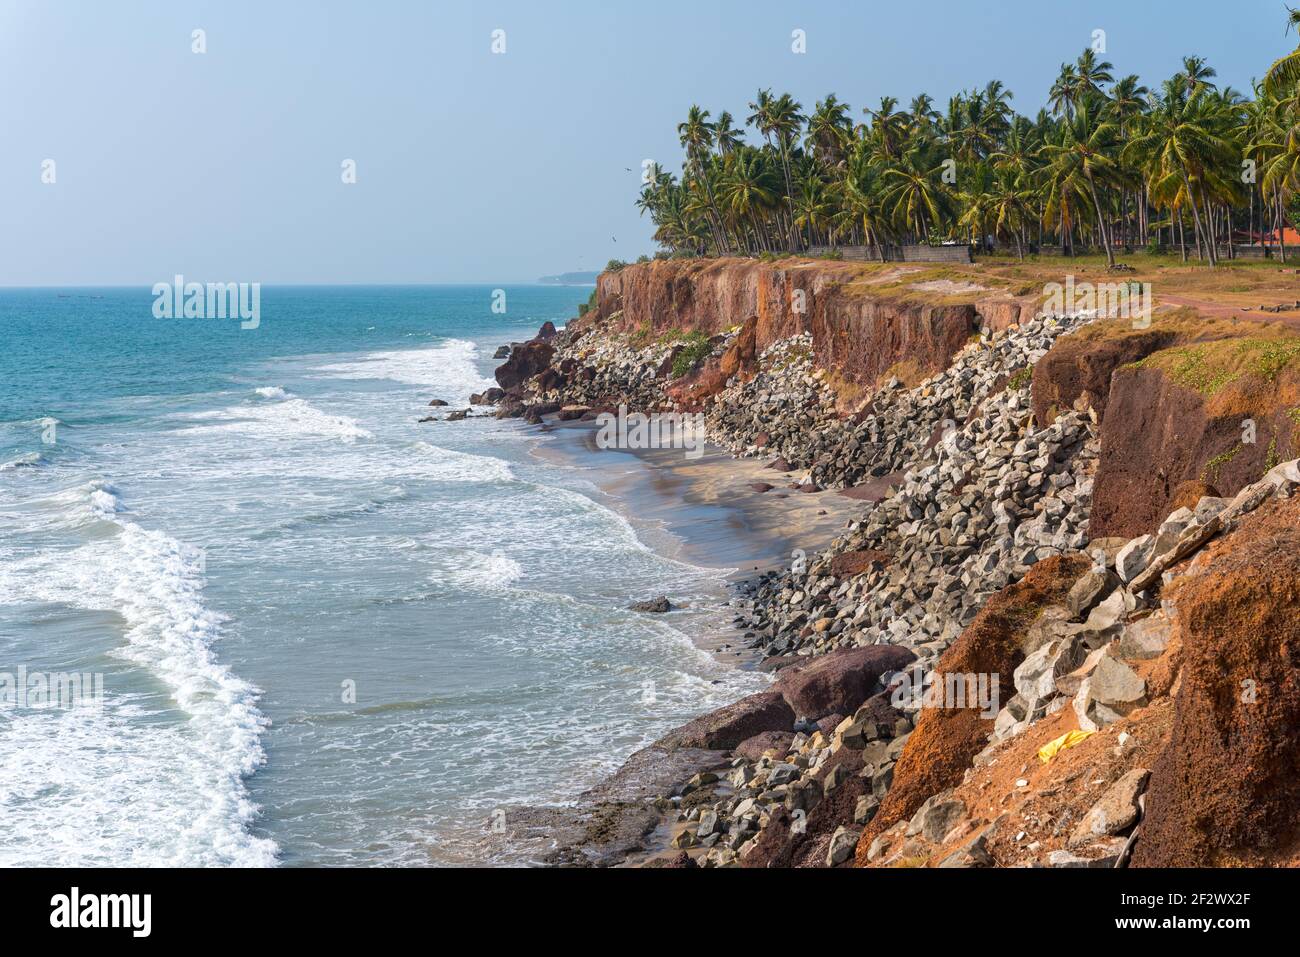 Sea shore protection measures in India - steep coastline strengthened with stones.Varkala, Kerala, India. Stock Photo